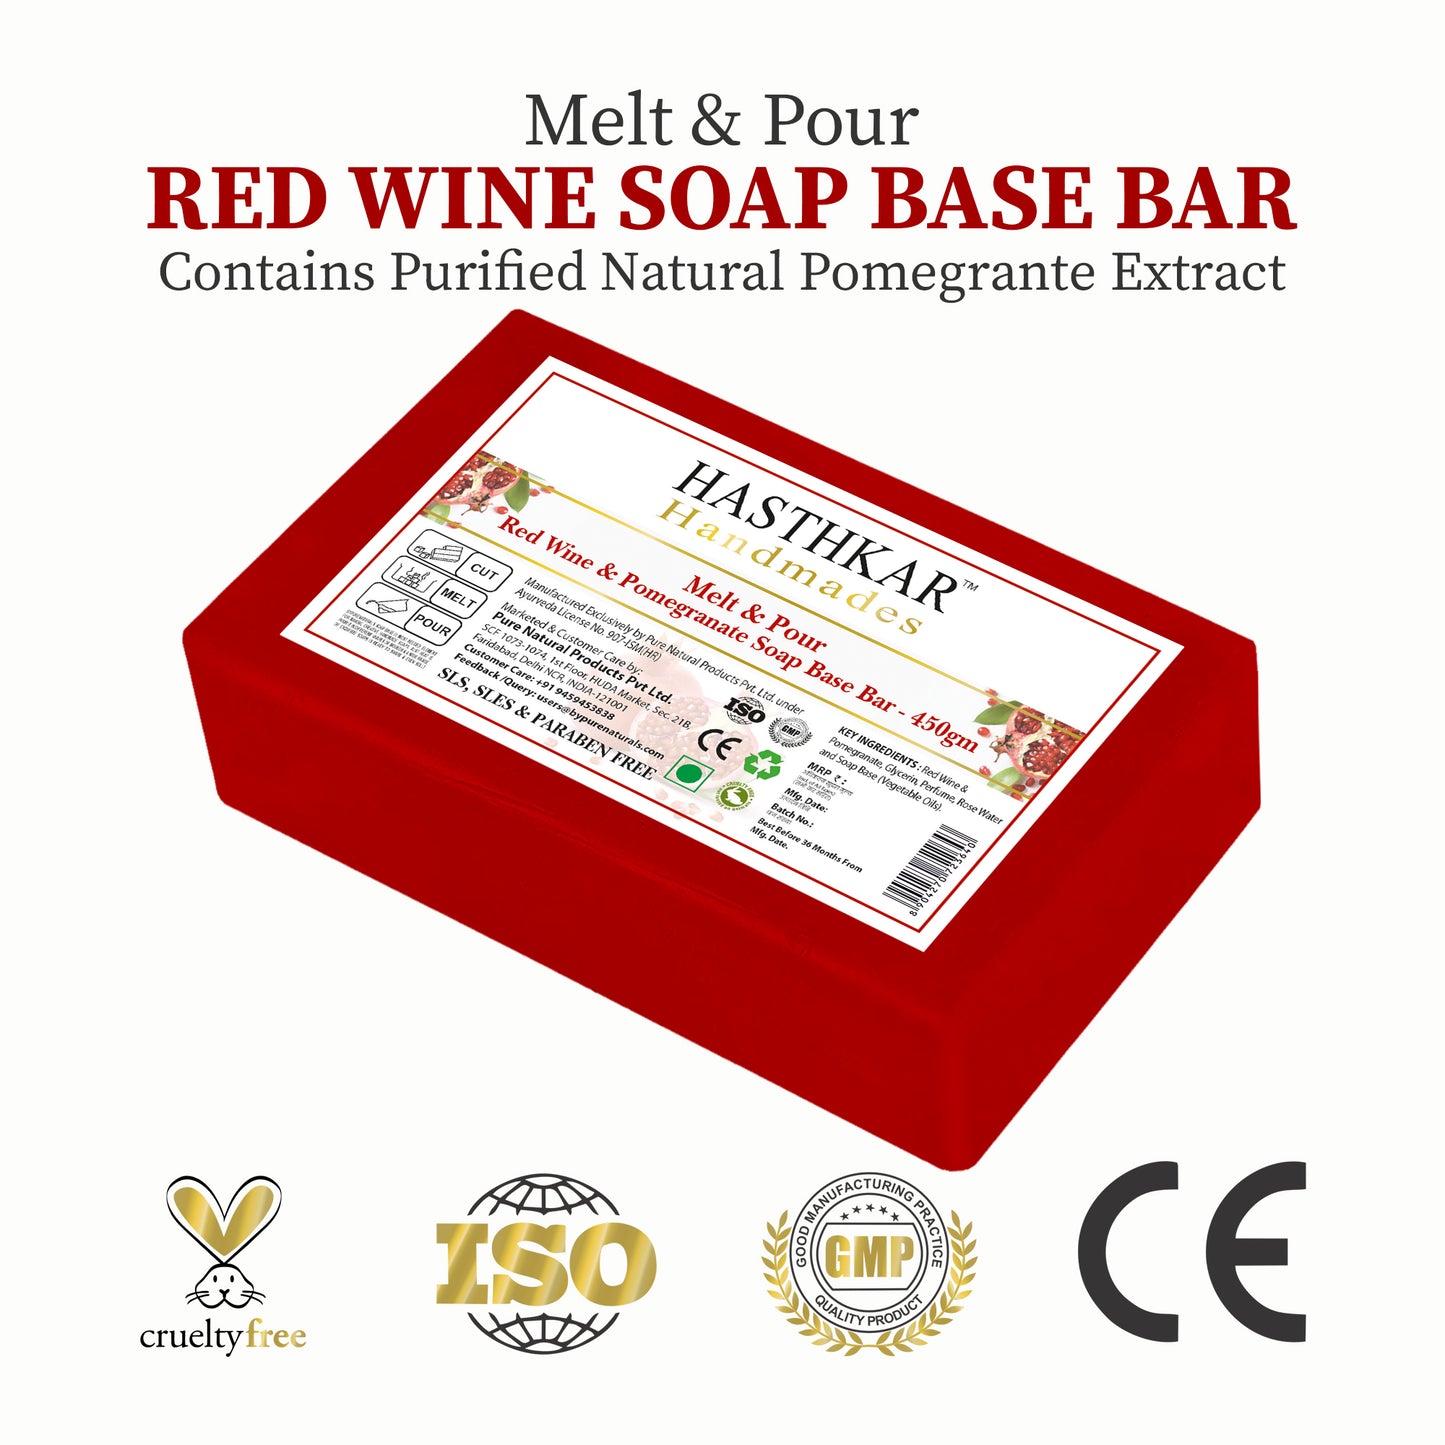 Hasthkar Handmades Glycerine Red Wine Pomegranate SLS Paraben free Soap base (pack of 2) 45gm